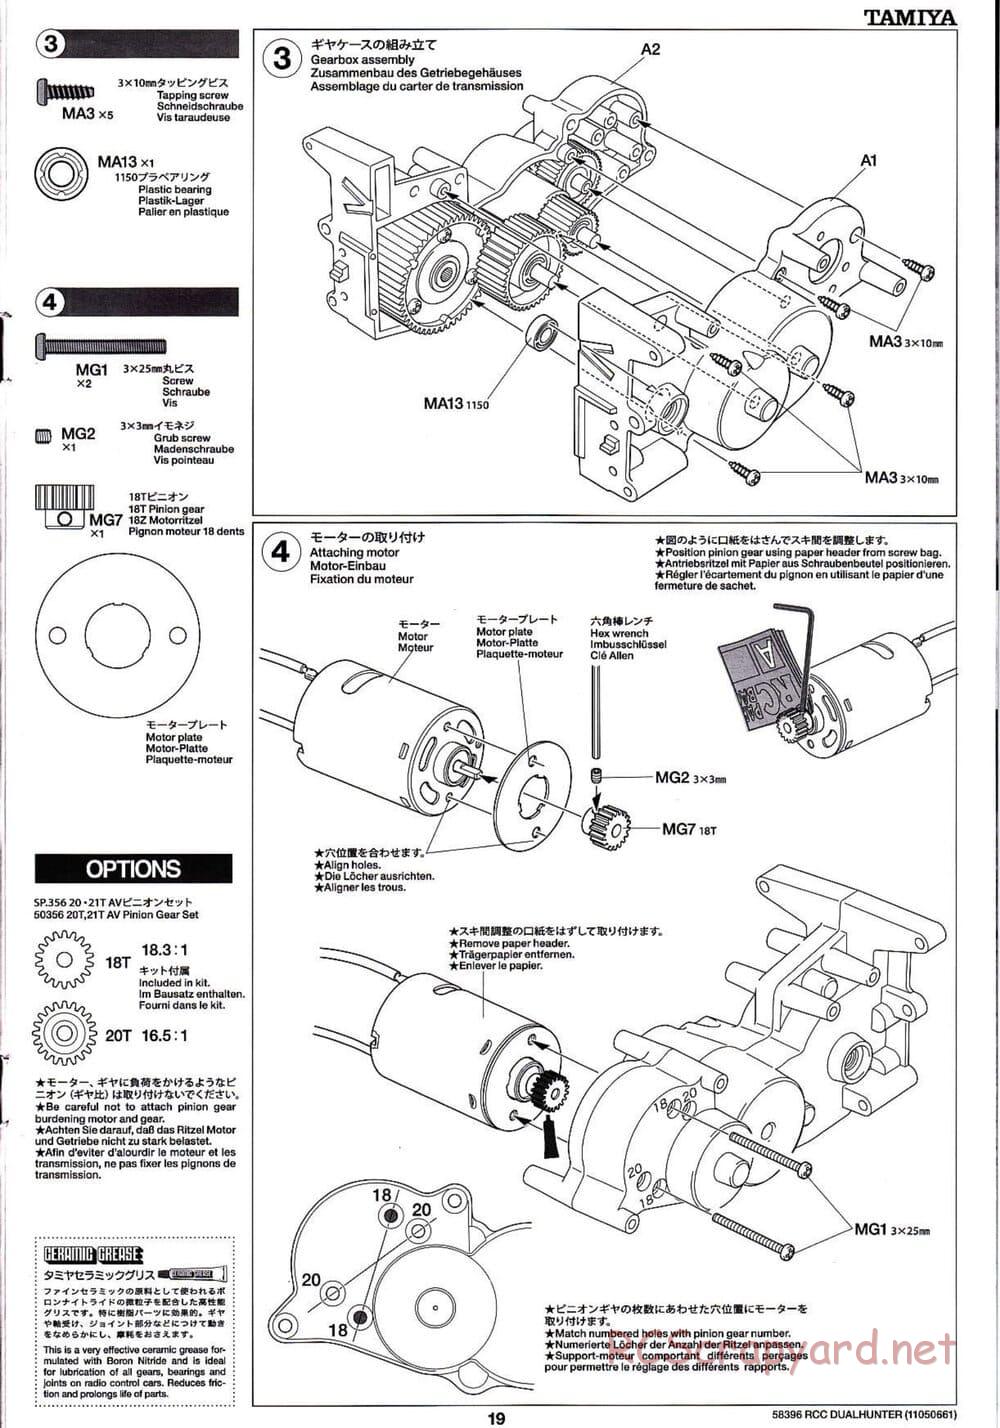 Tamiya - Dualhunter - WR-01 Chassis - Manual - Page 19